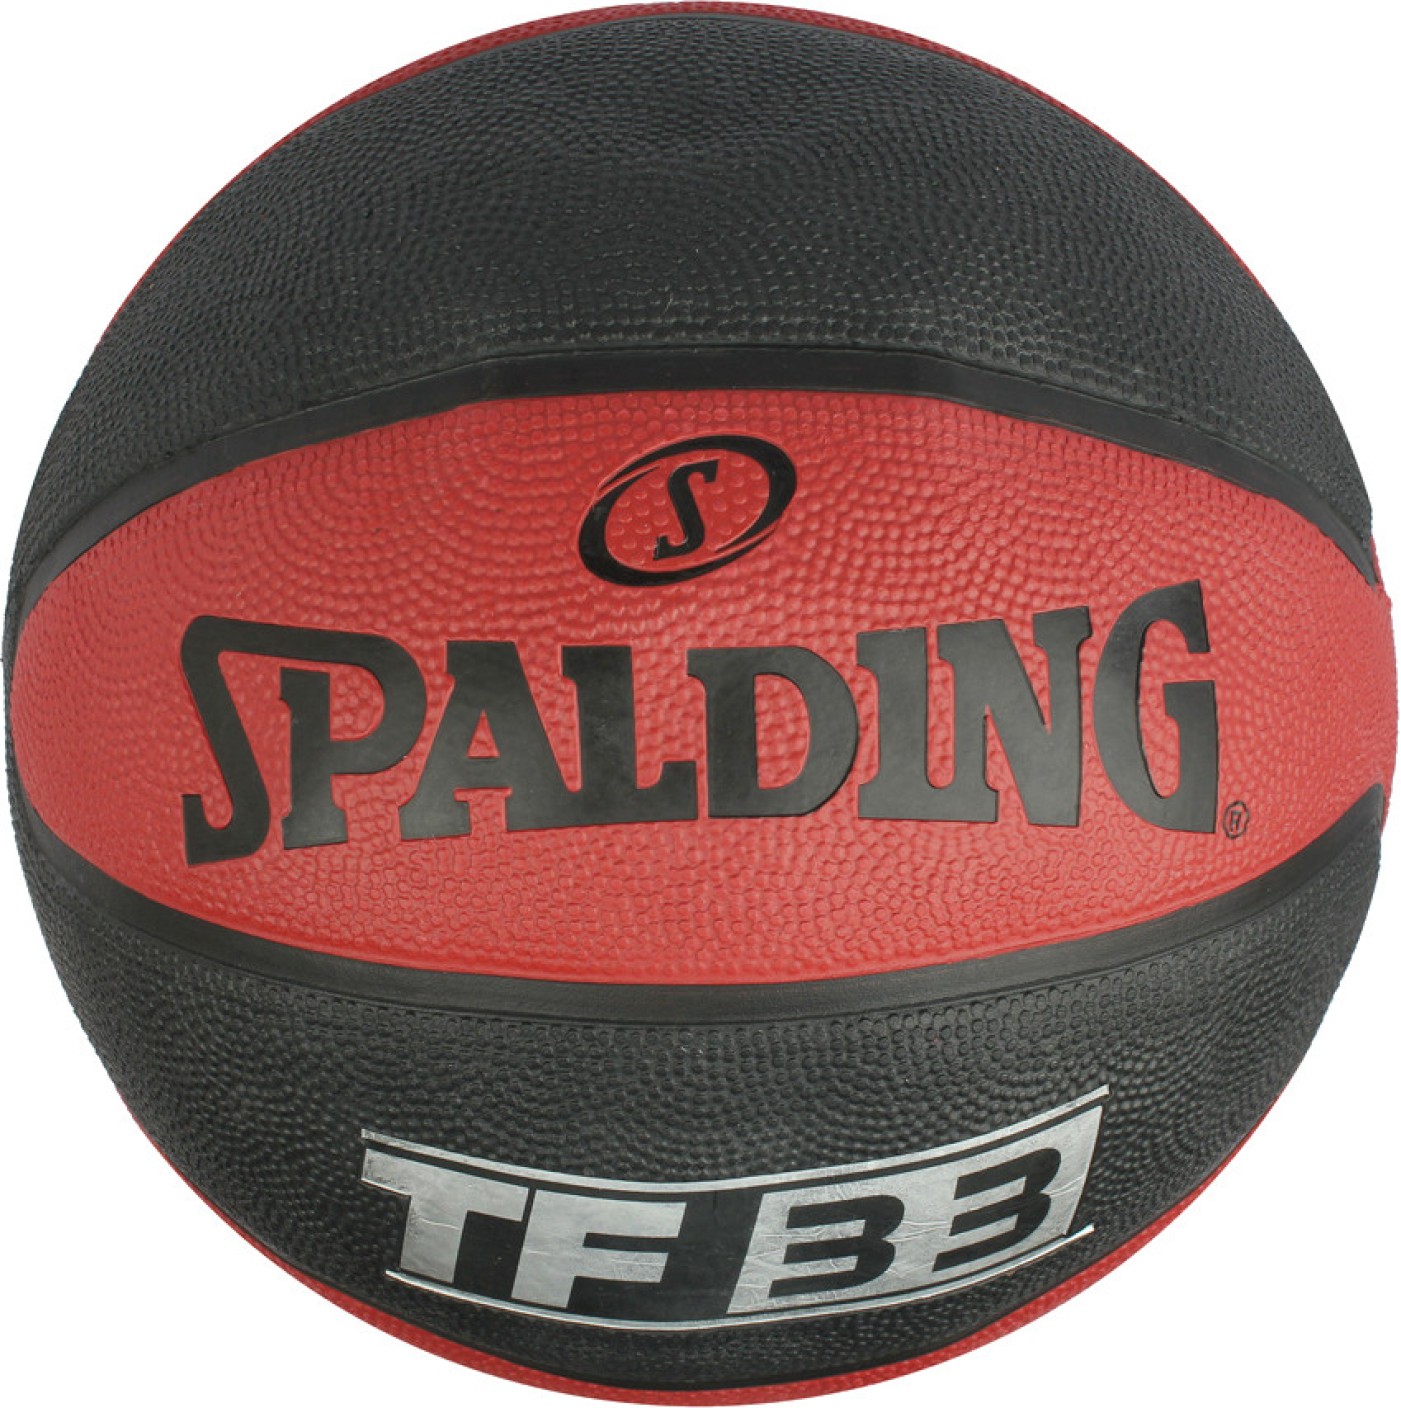 SPALDING TF-33 Basketball - Size: 7 - Buy SPALDING TF-33 Basketball